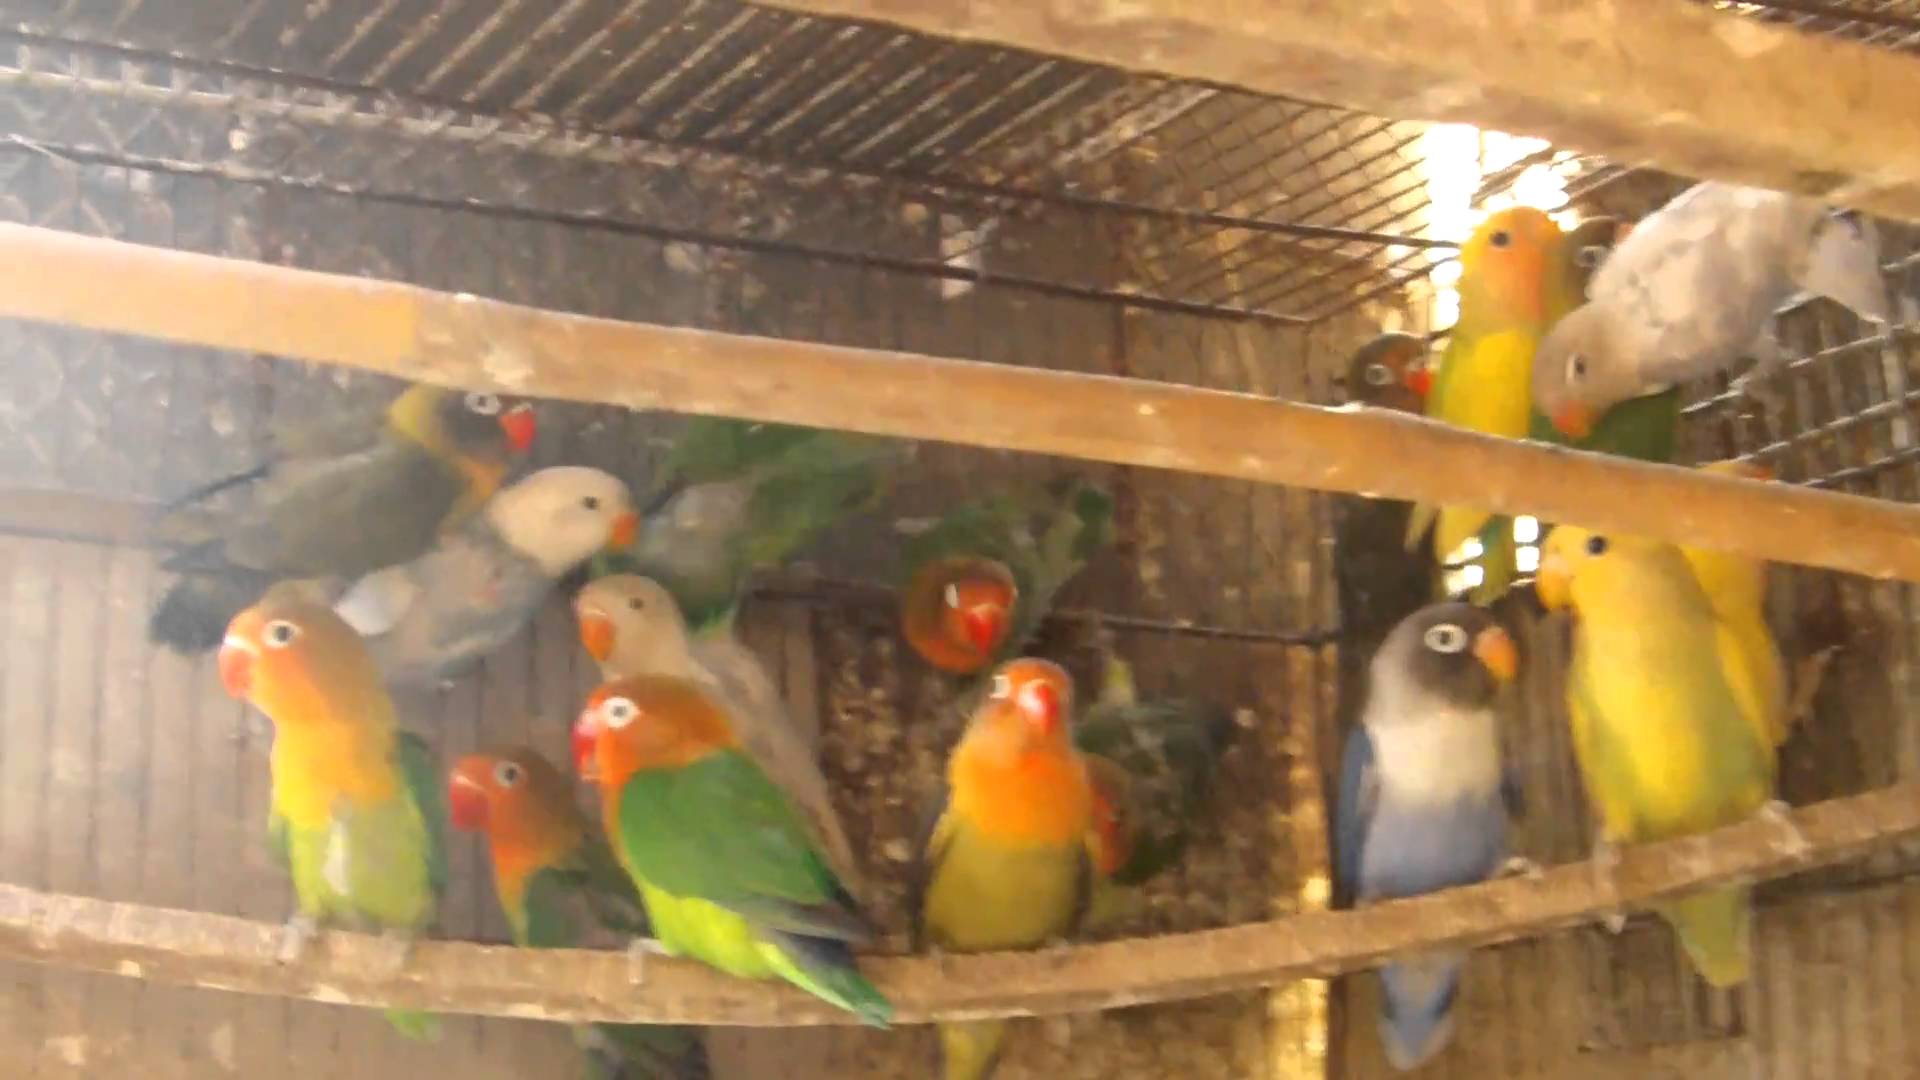 LOVE BIRDS (YOUNG MIX COLORS) OF SYED OVAIS BILGRAMI - YouTube